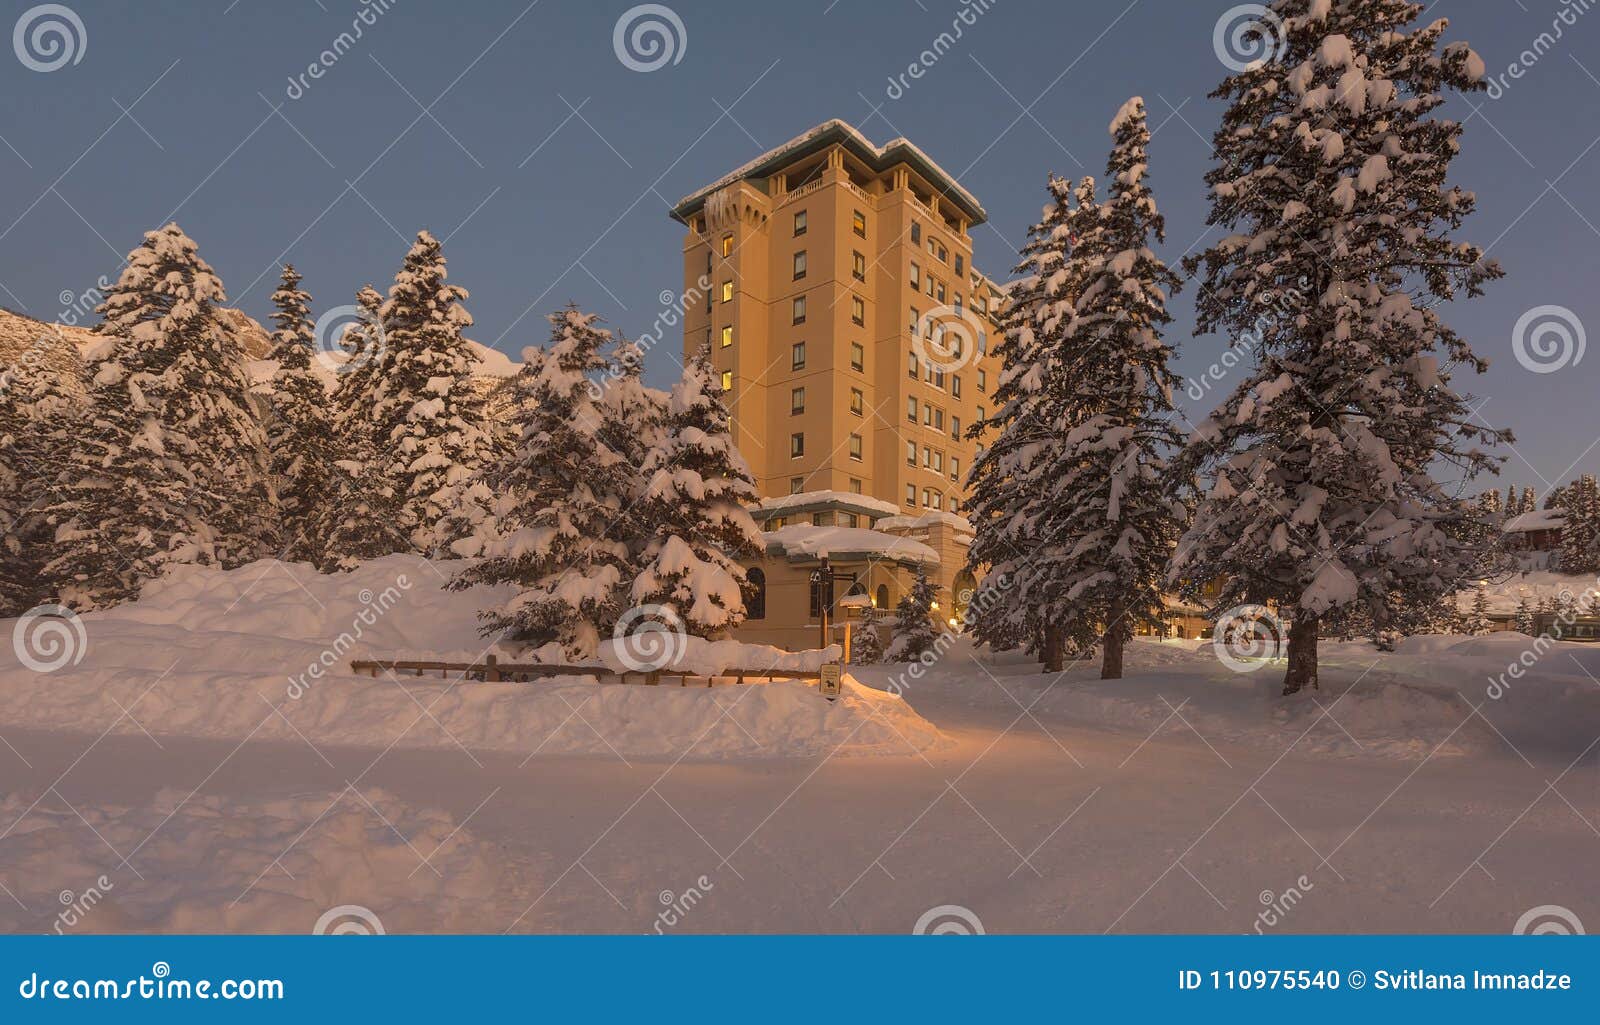 The Fairmont Chateau Lake Louise Hotel Editorial Image - Image of historic, chateau: 110975540